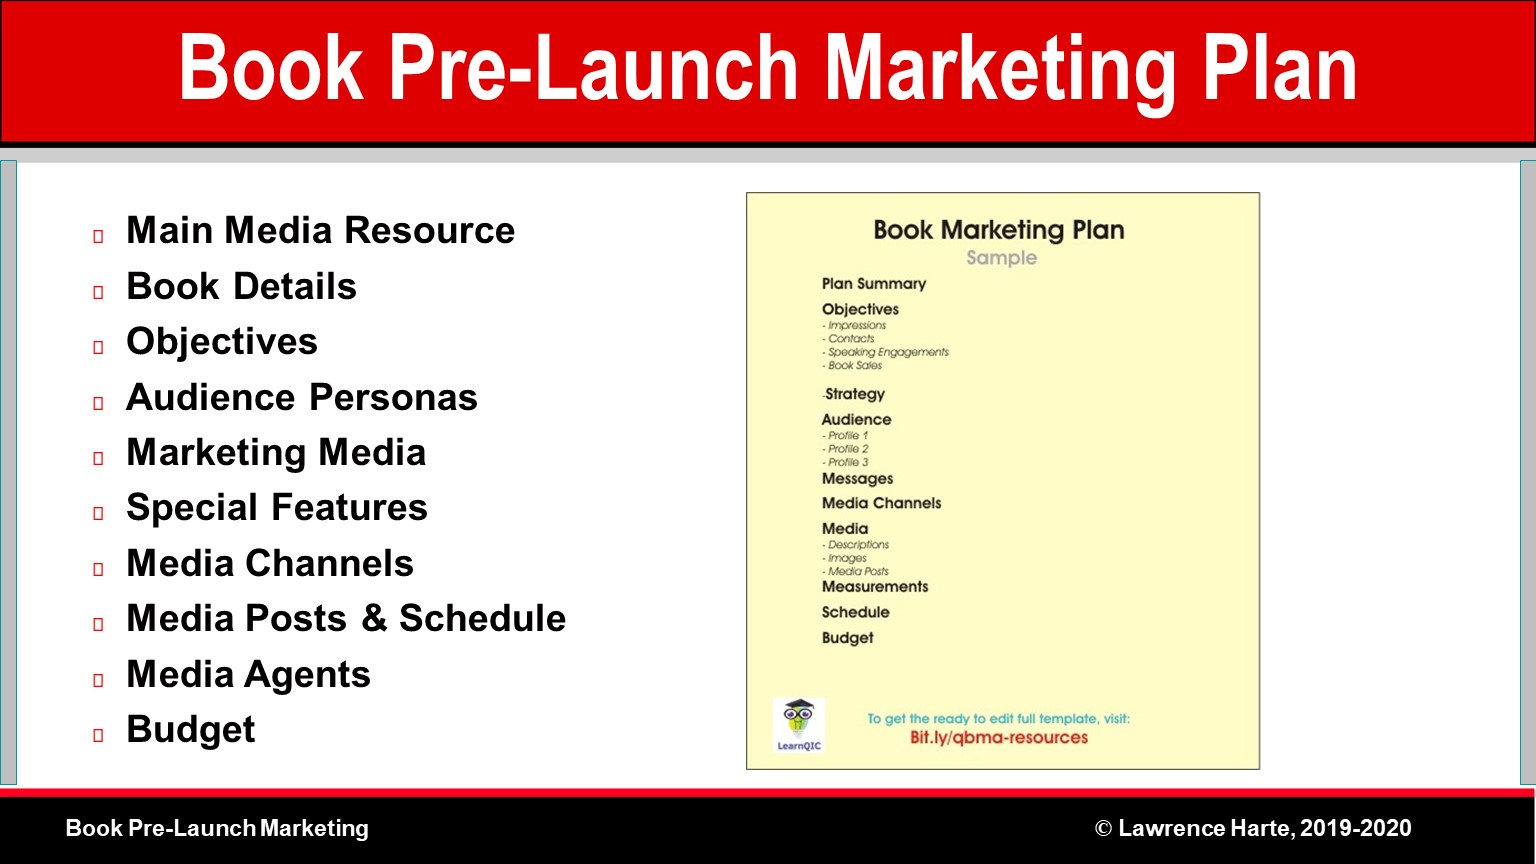 Book Pre-Launch Marketing Plan